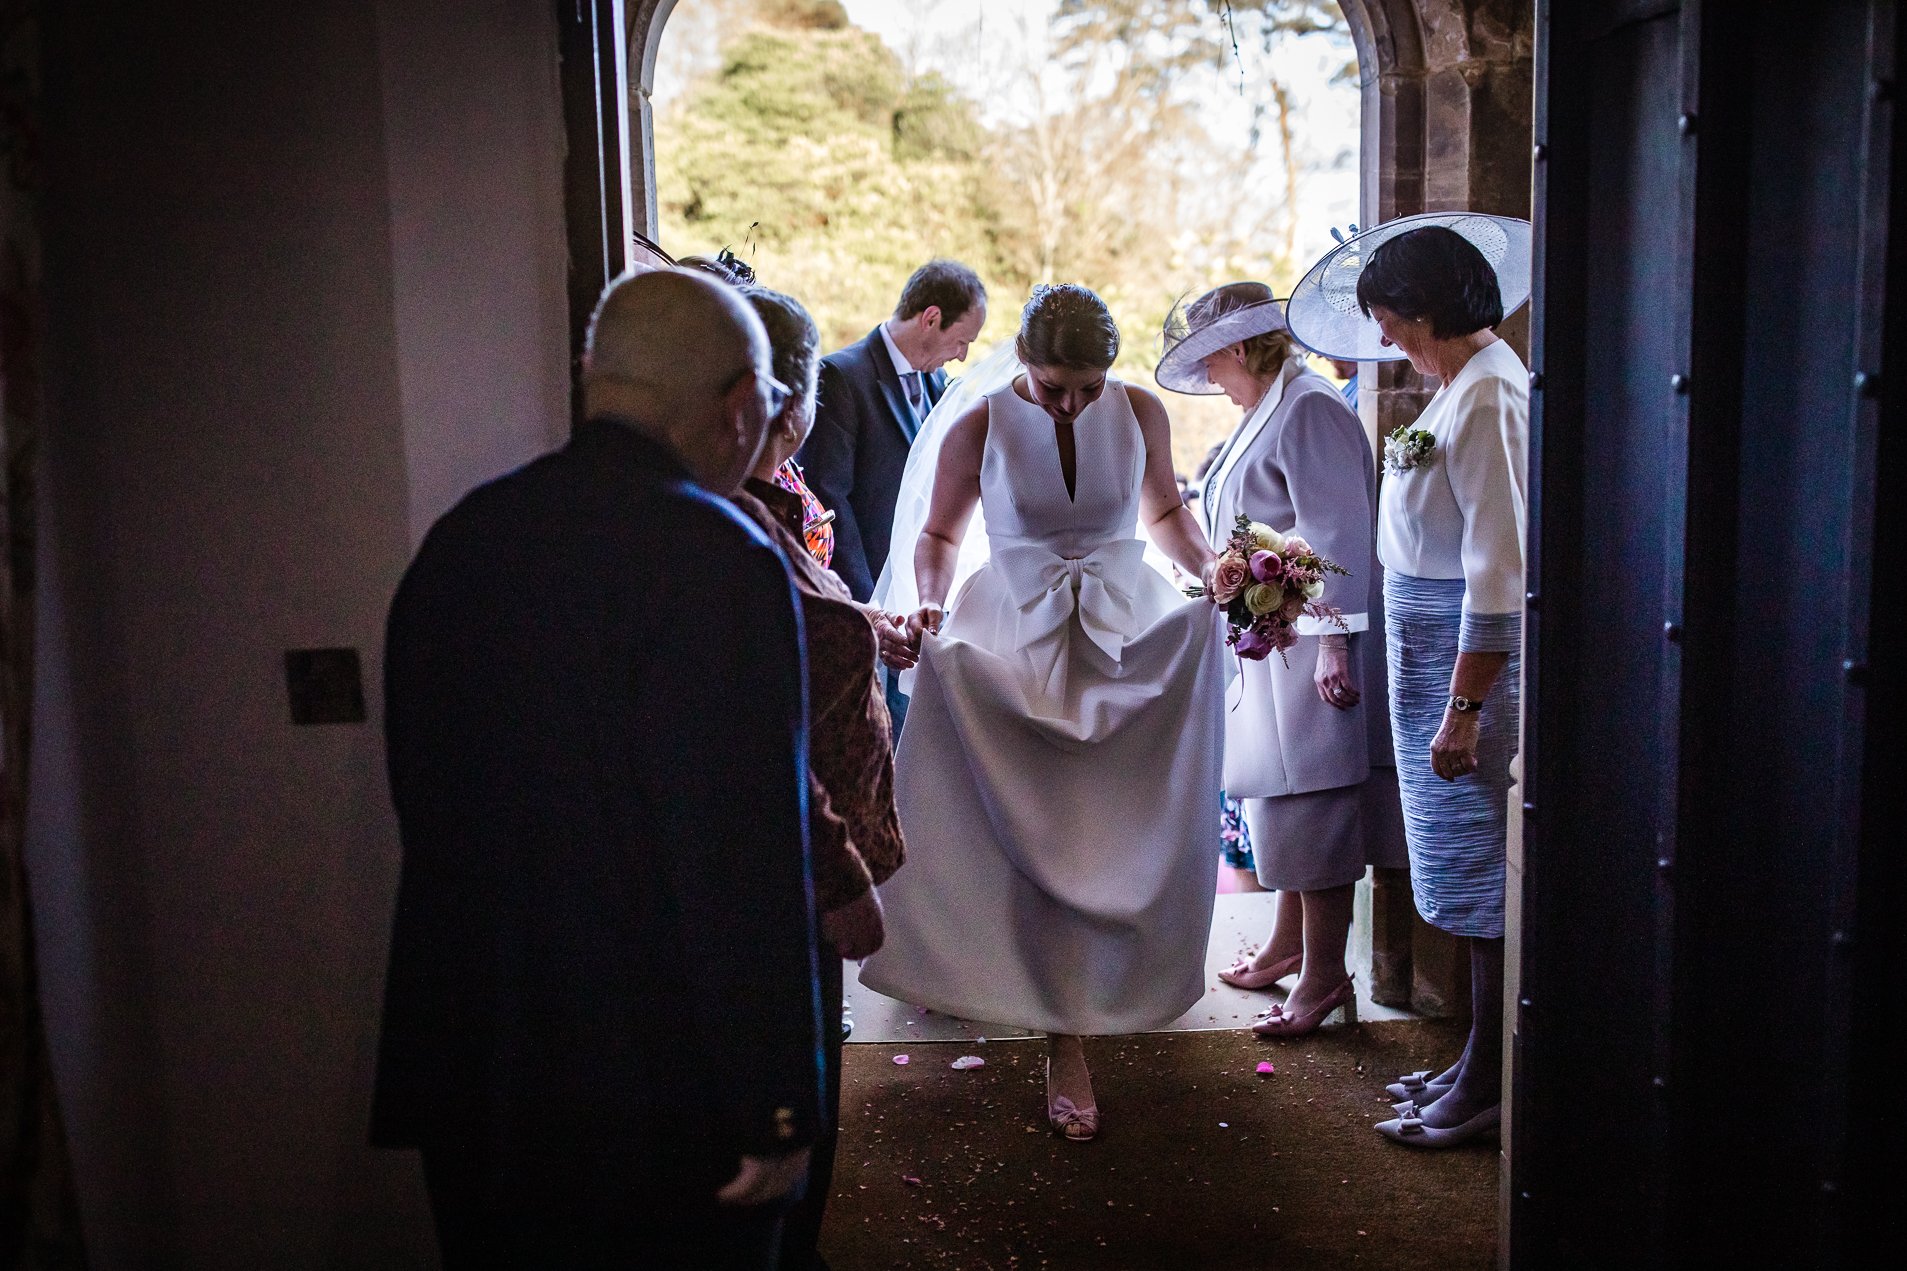 Gravetye manor wedding photographers-142.jpg